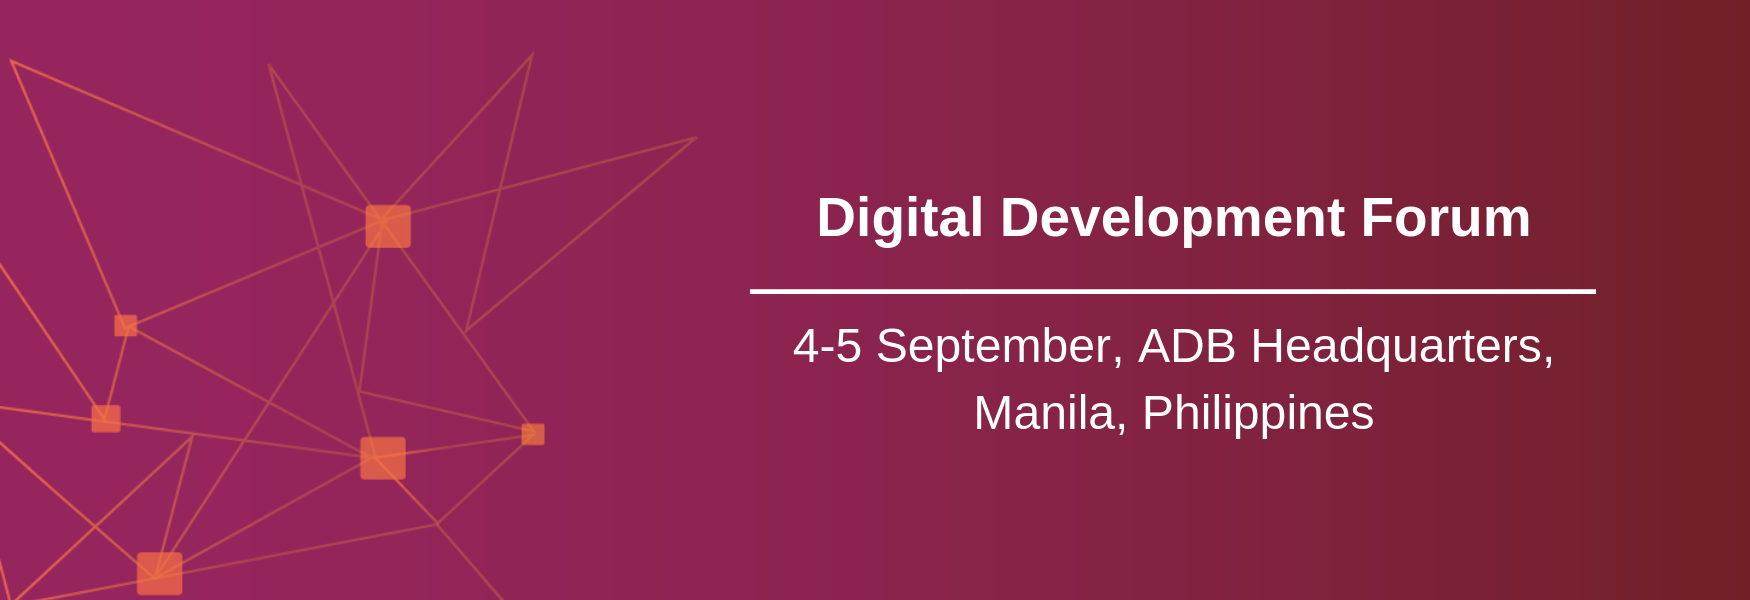 Digital Development Forum